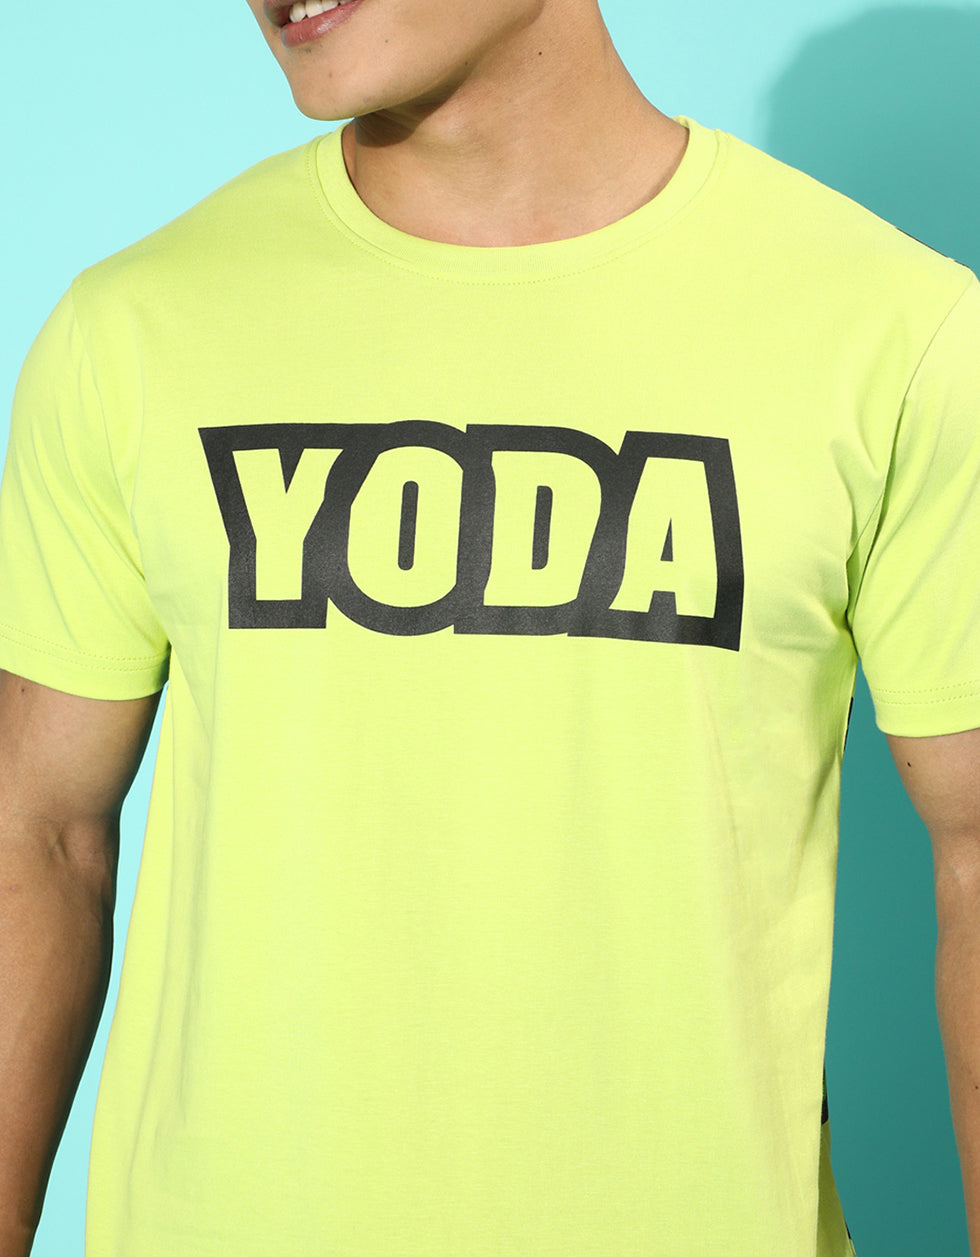 Starwards Yoda - Original Starwars Half Sleeve T-Shirt Veirdo